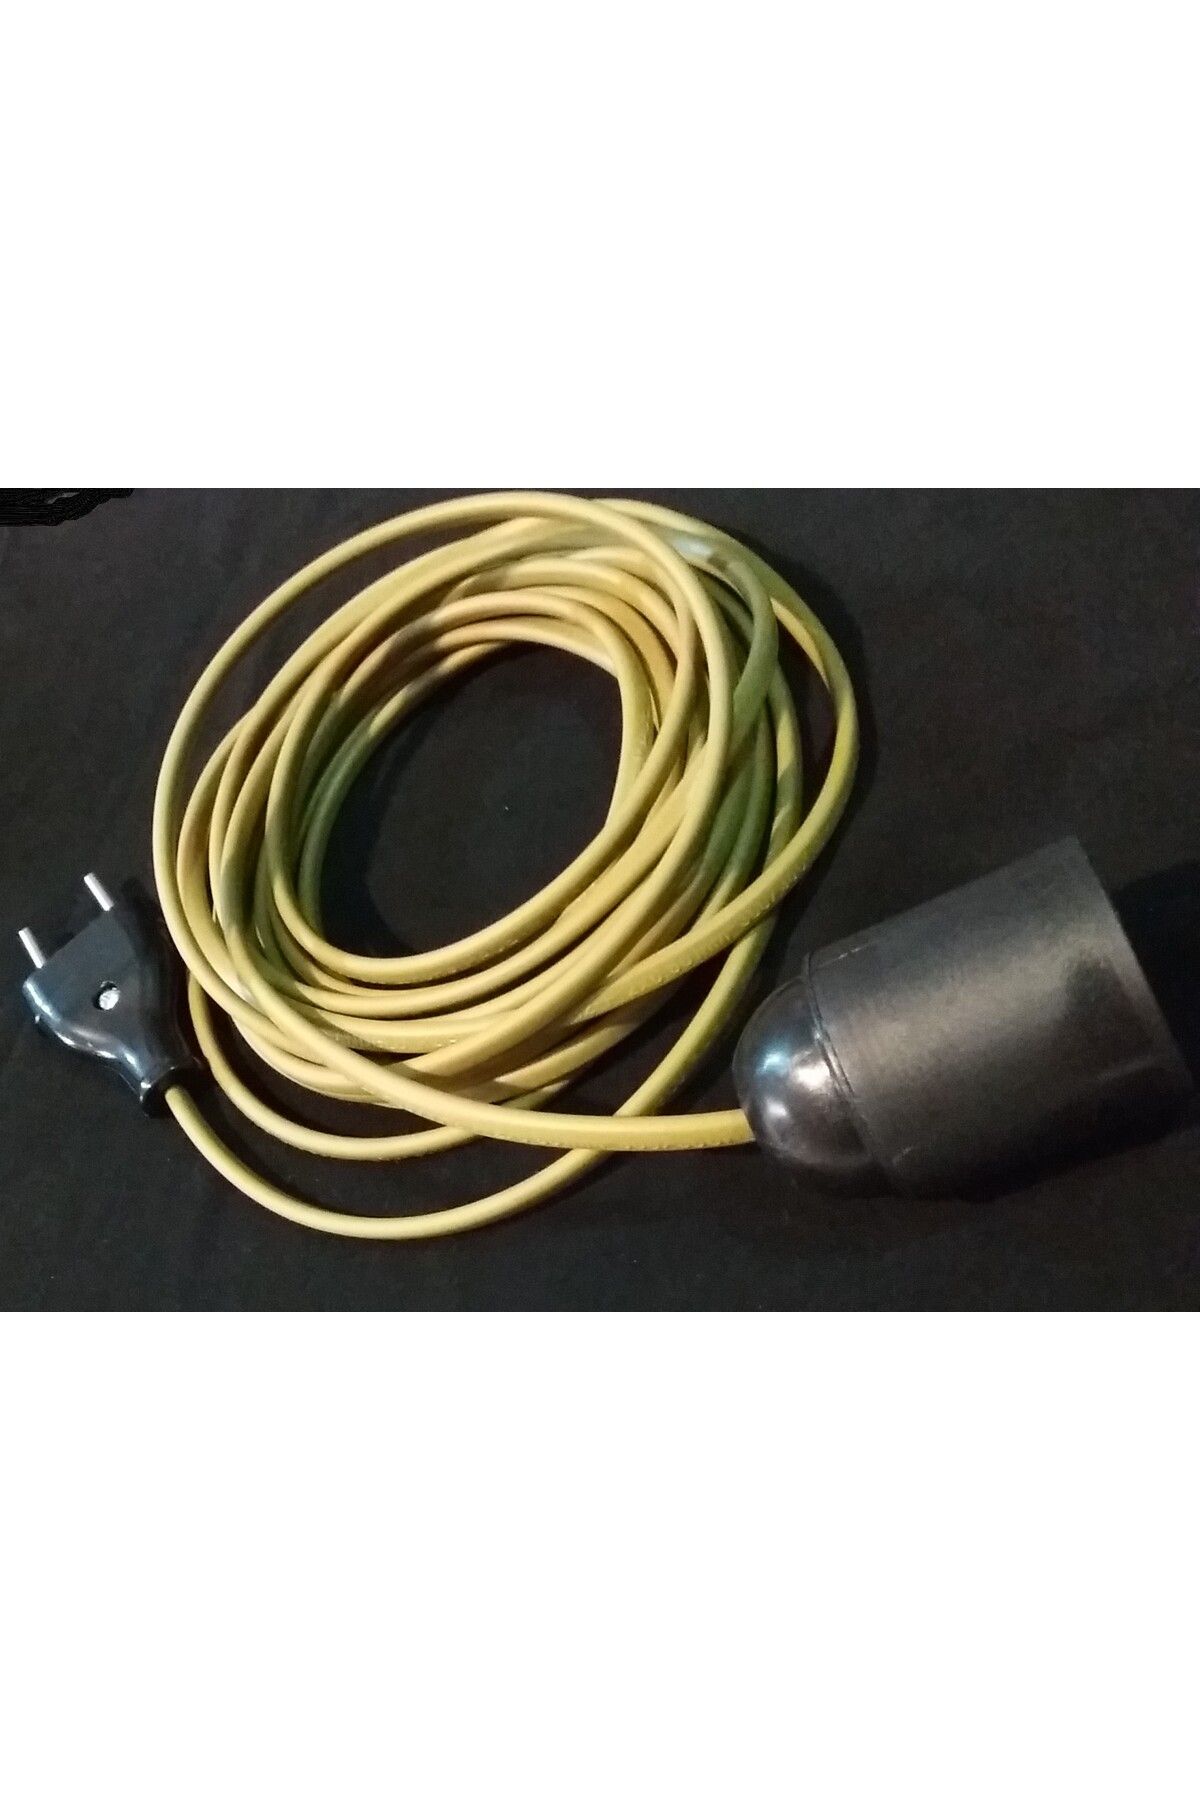 Elektrikçim Yeşil-siyah, 3 metre lamba uzatma kablosu